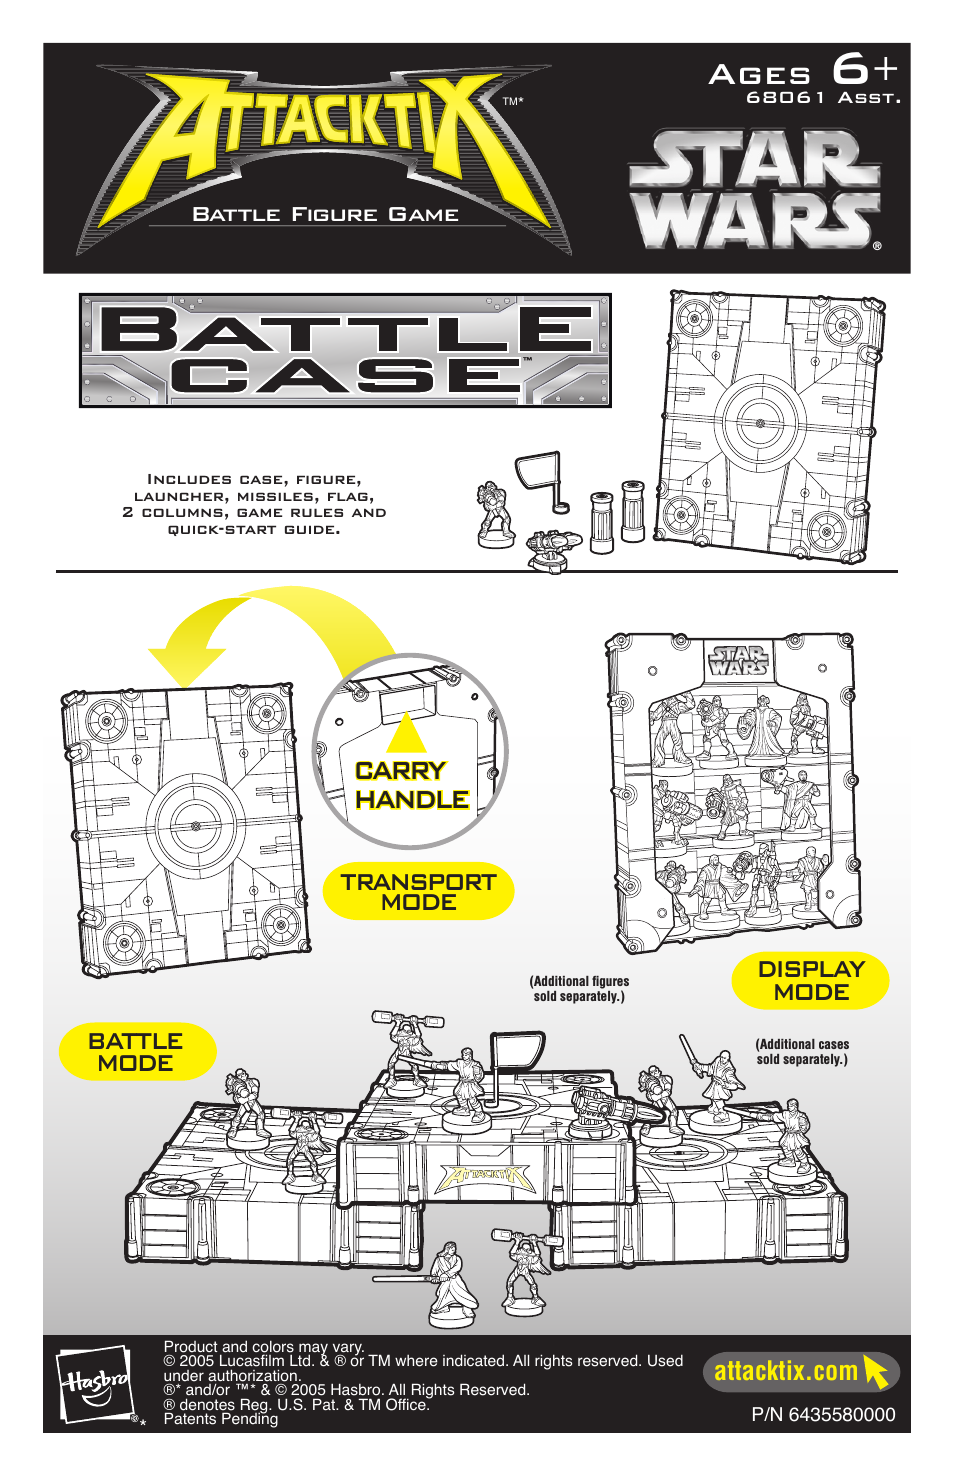 Attacktix Battle Figure Game 68061